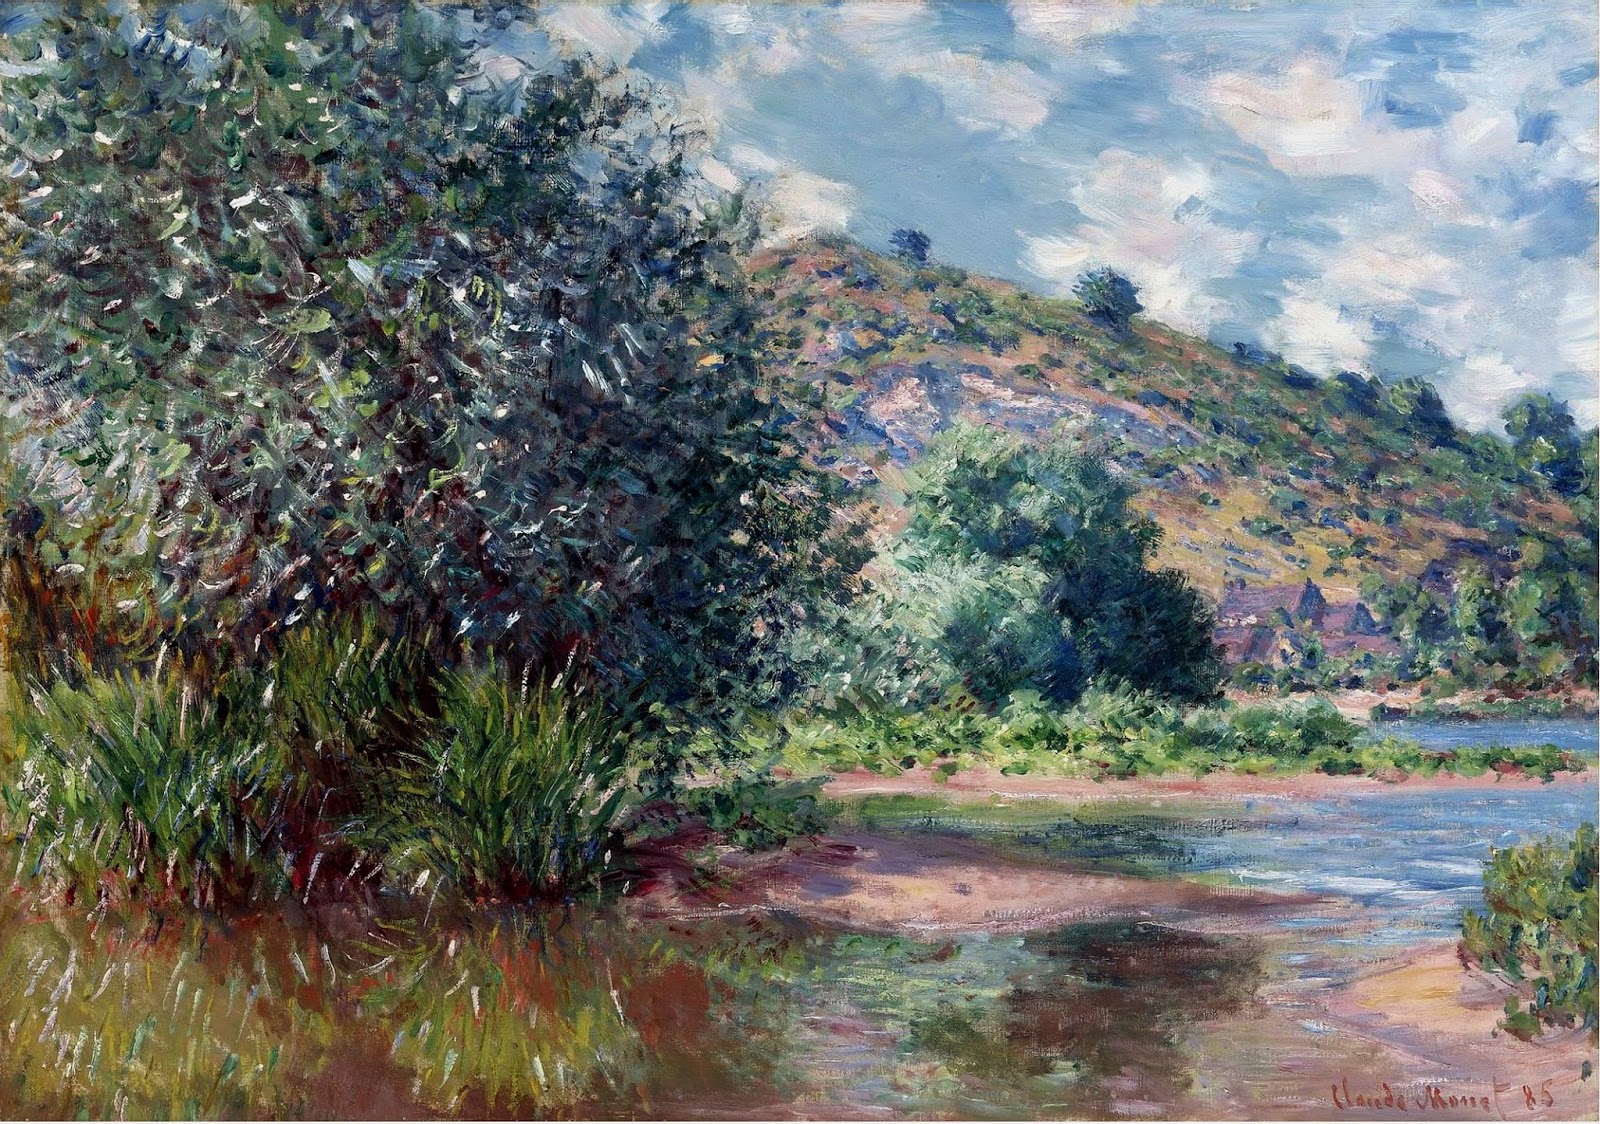 Claude+Monet-1840-1926 (394).jpg